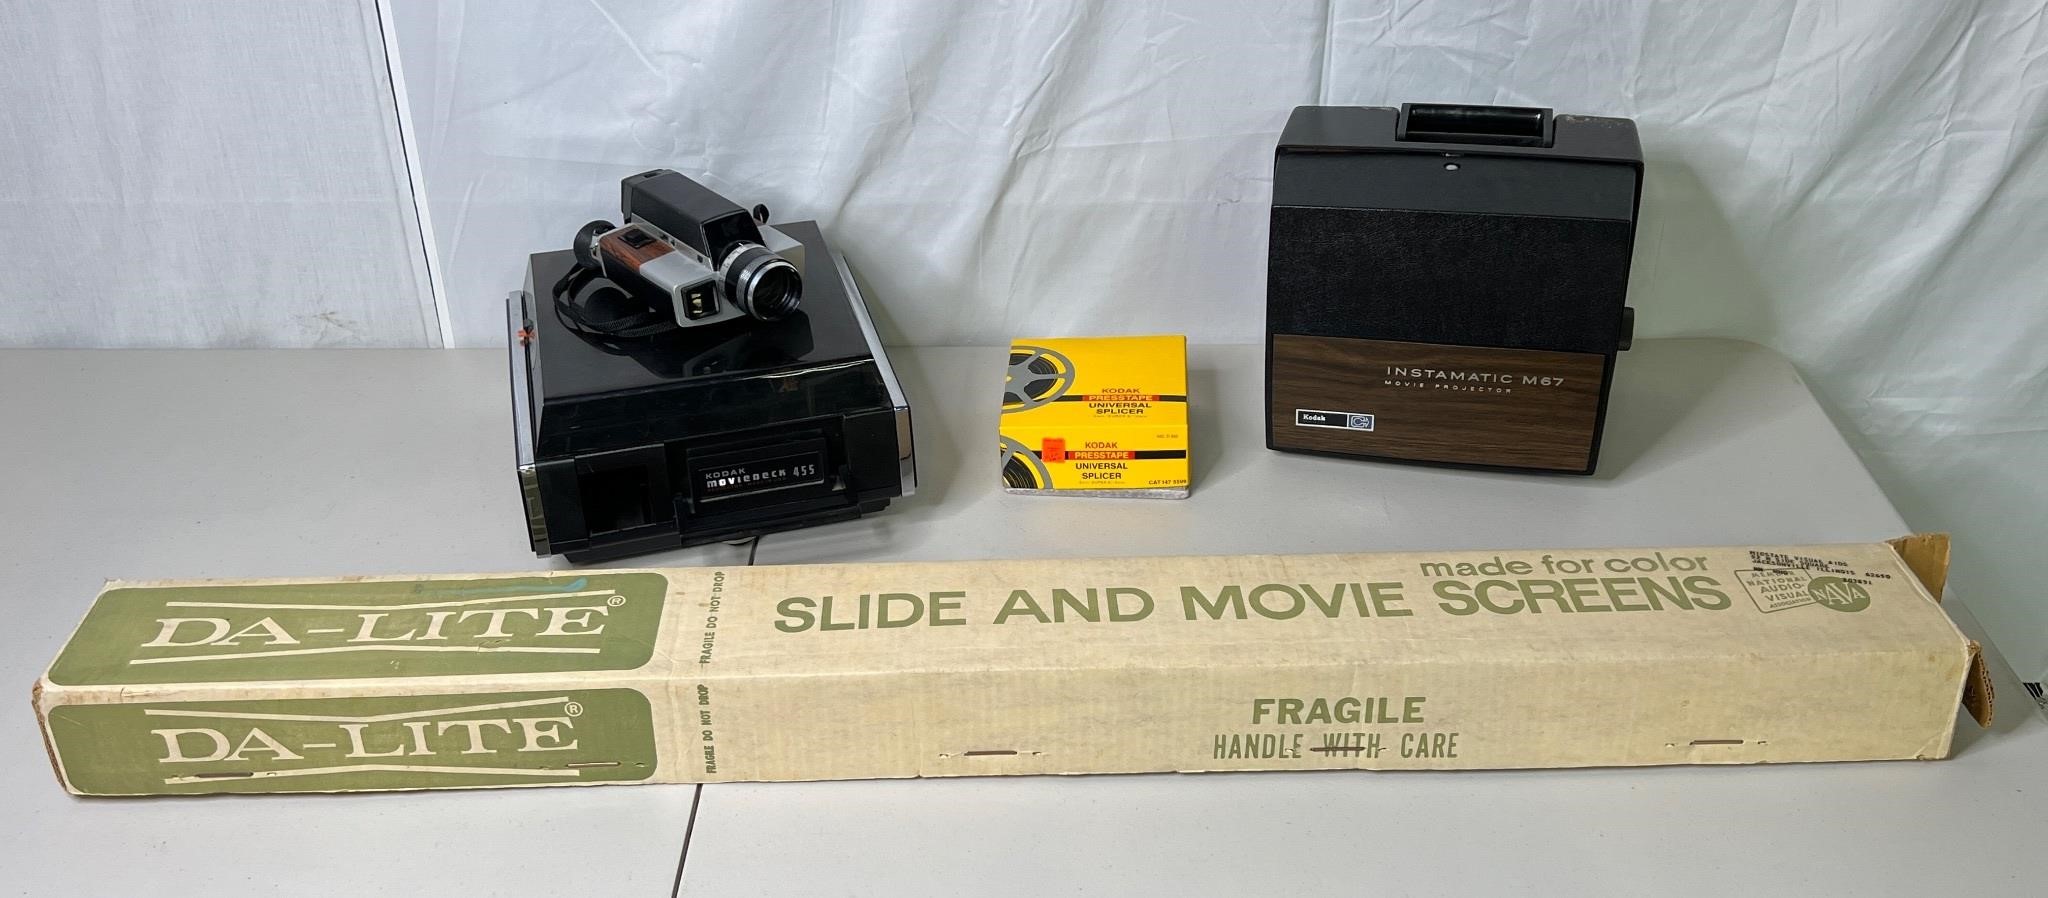 Kodak Movie Camera, Instamatic, Movie Deck & More